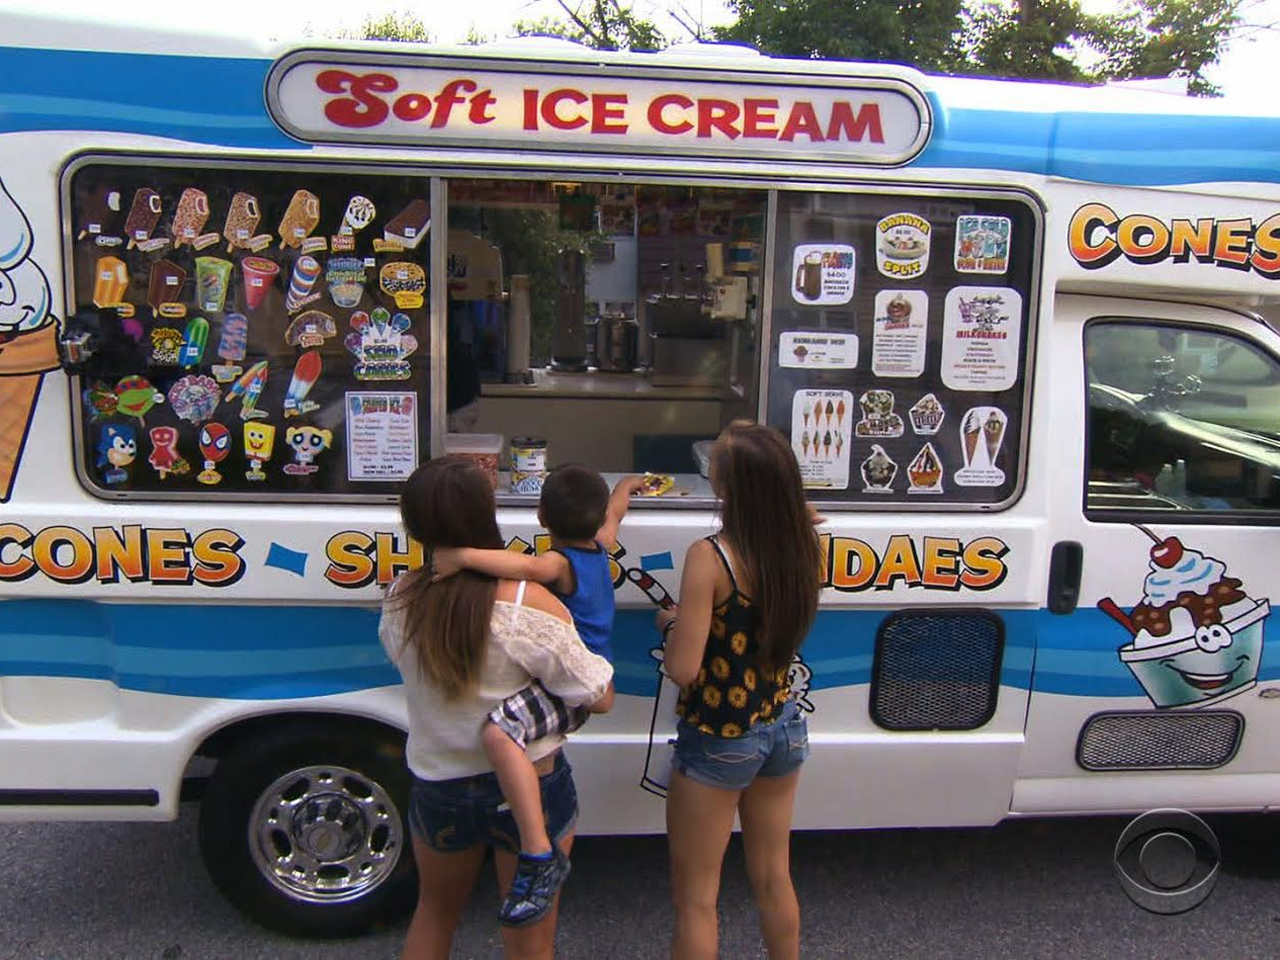 We all scream for the ice cream truck - CBS News1280 x 960